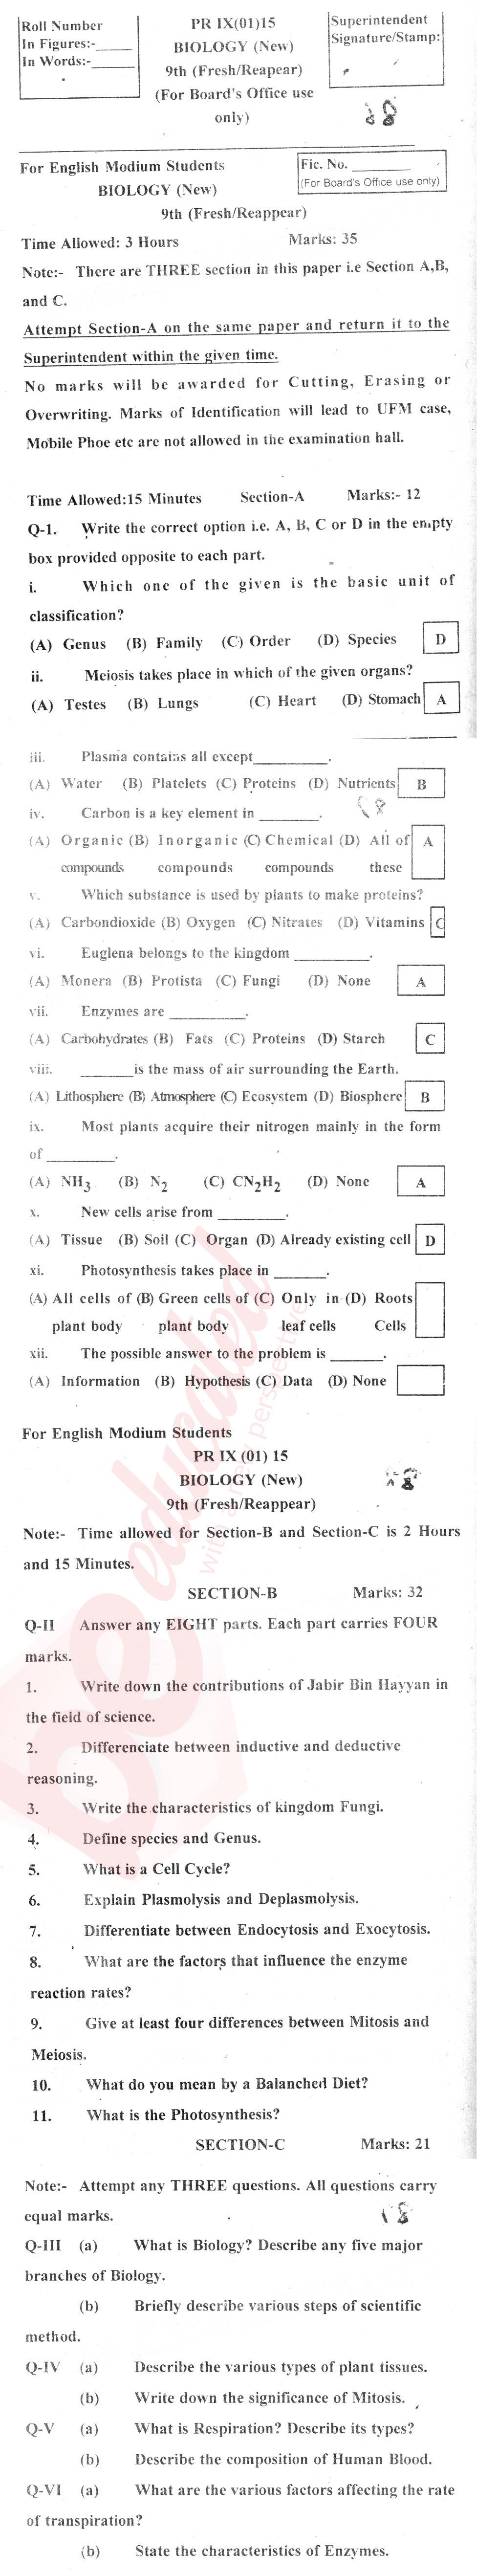 Biology 9th English Medium Past Paper Group 1 BISE Bannu 2015